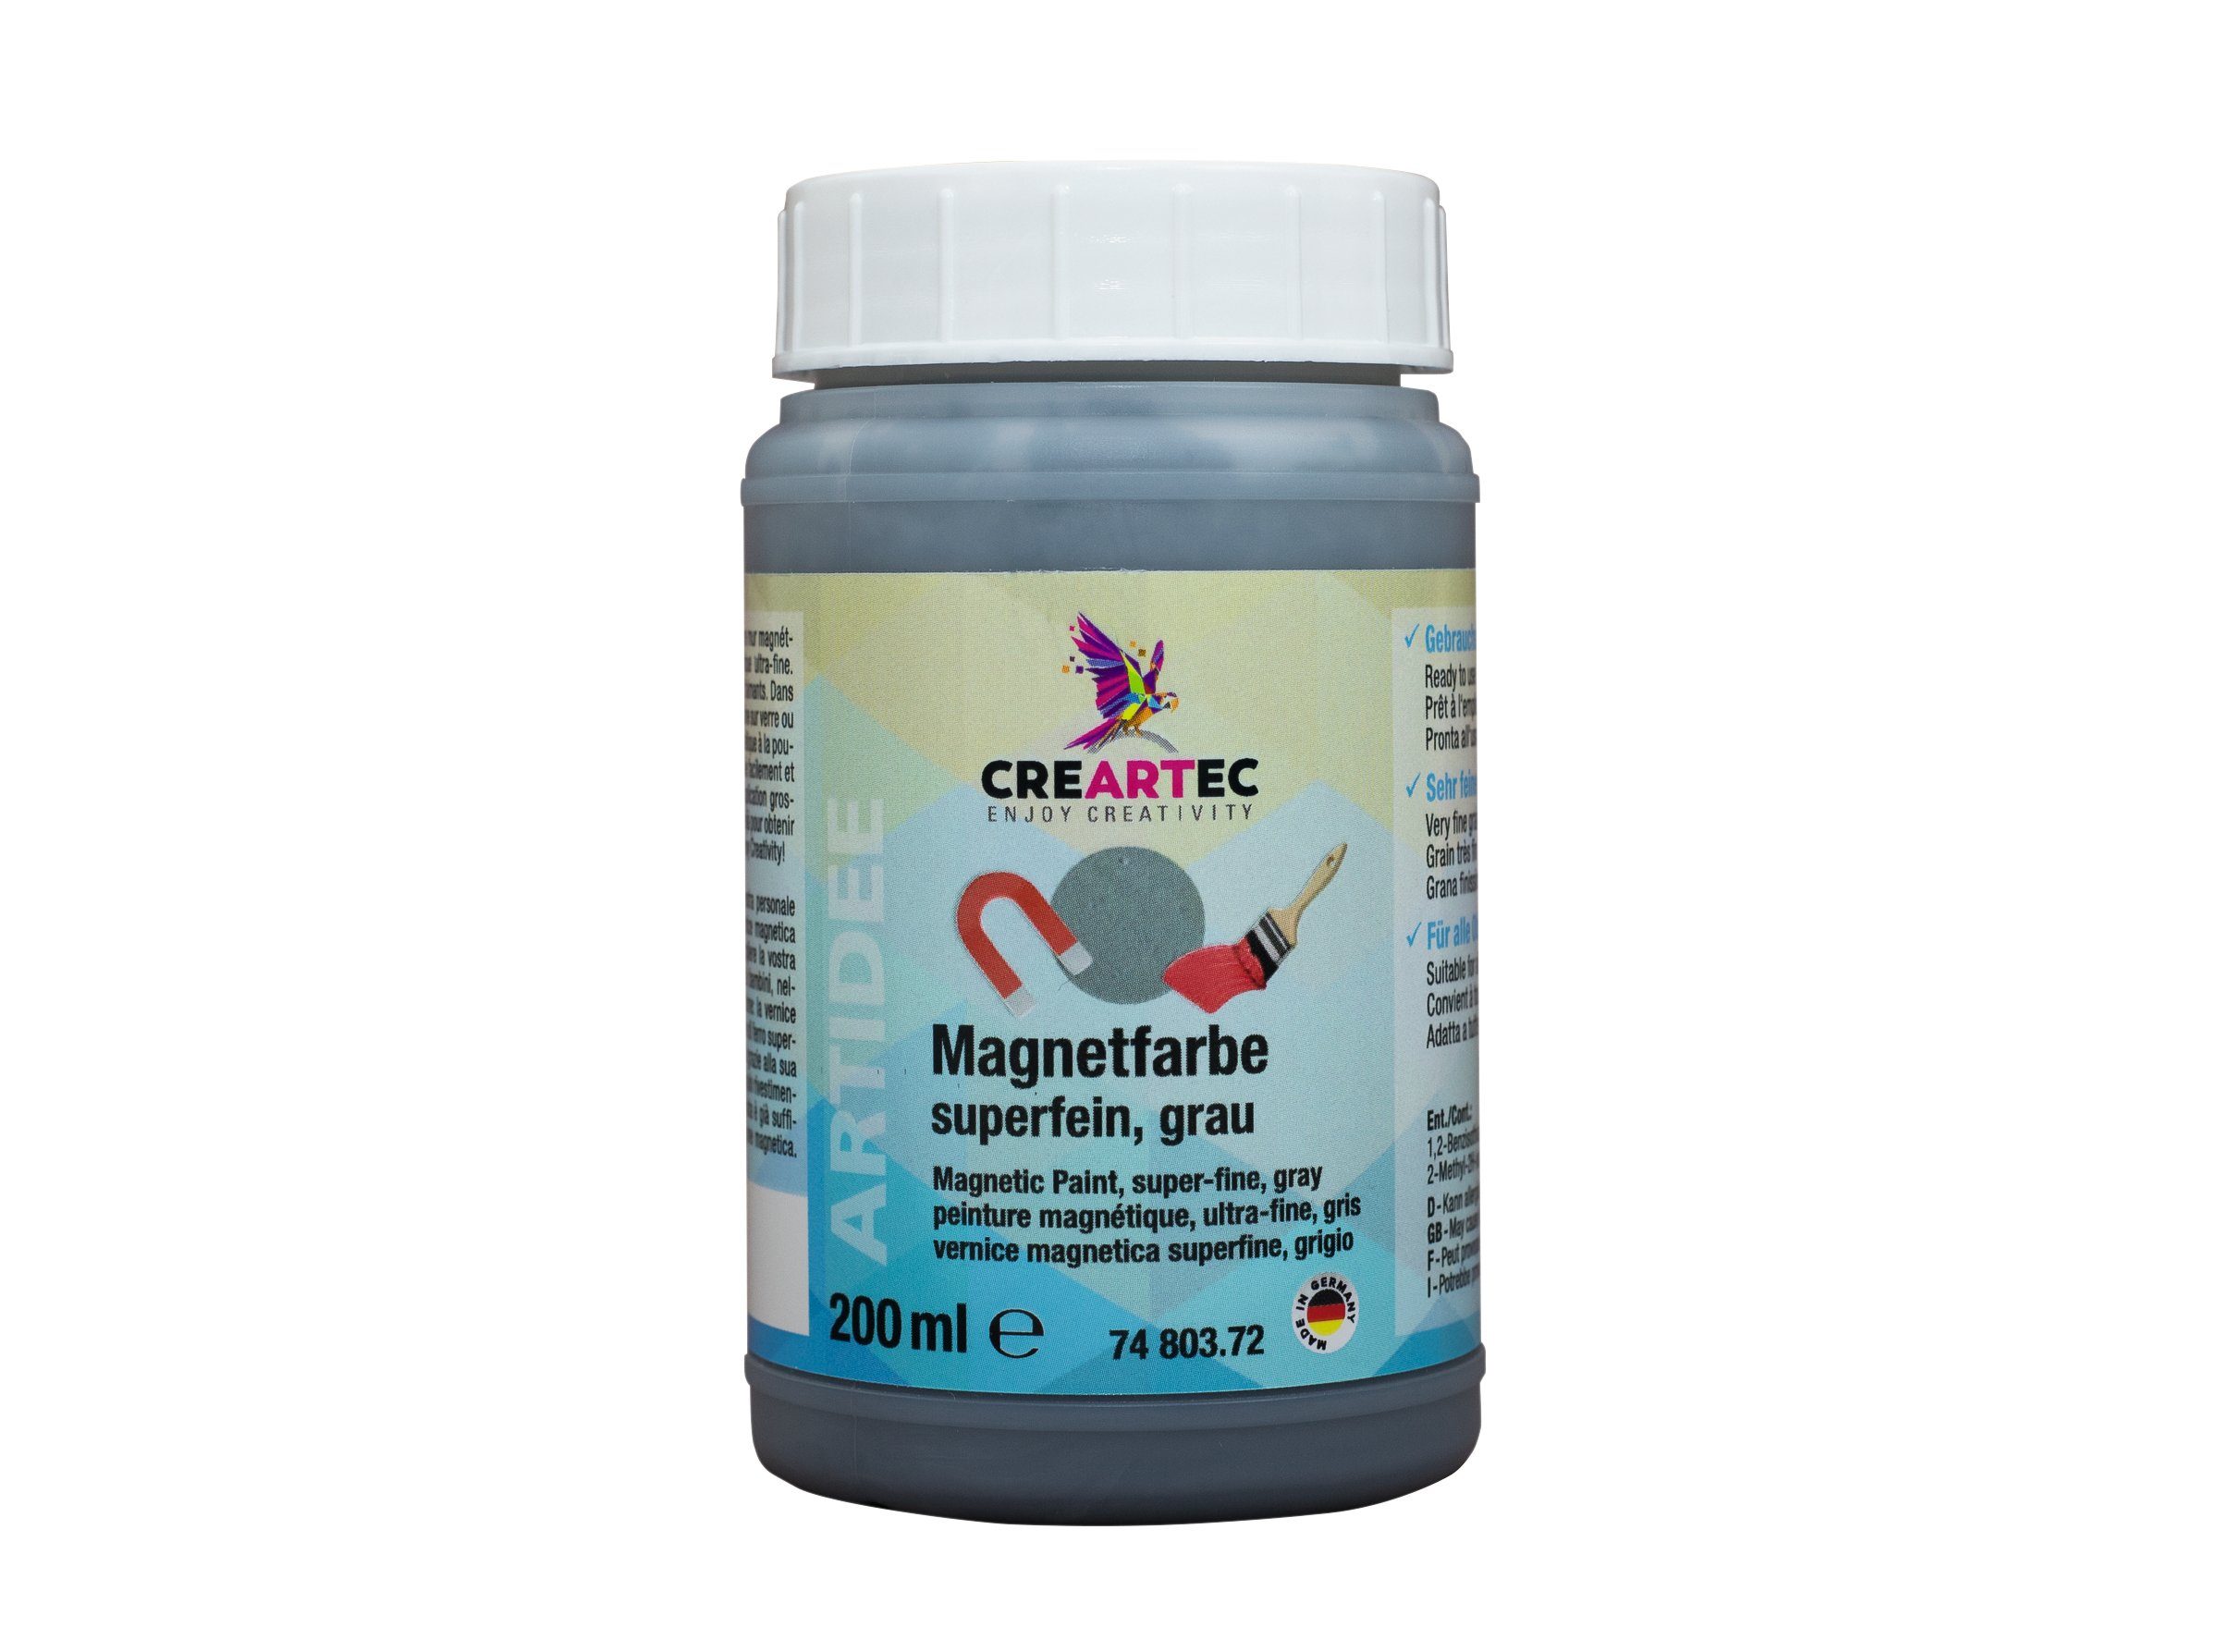 CREARTEC Magnetfarbe Magnetfarbe superfein, 200 ml Grau | Modellierwerkzeuge